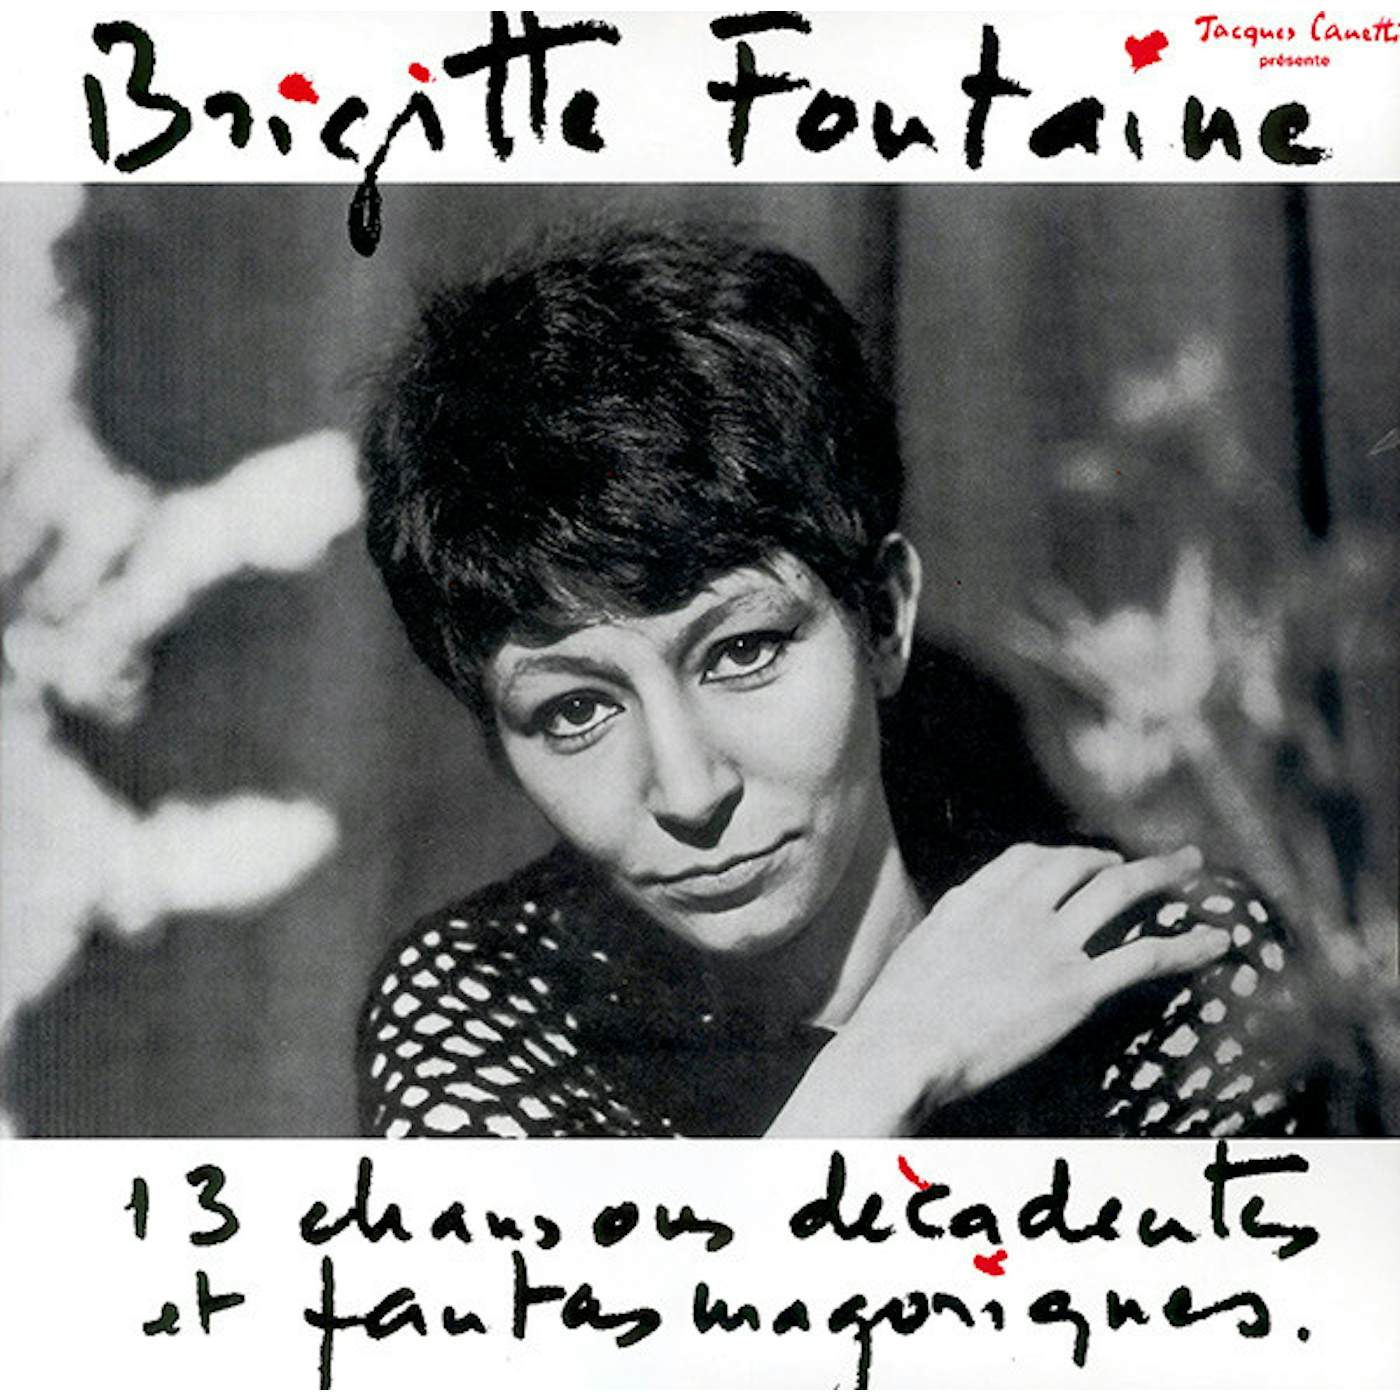 Brigitte Fontaine 13 CHANSONS DECADENTES ET FANTASMAGORIQUES Vinyl Record